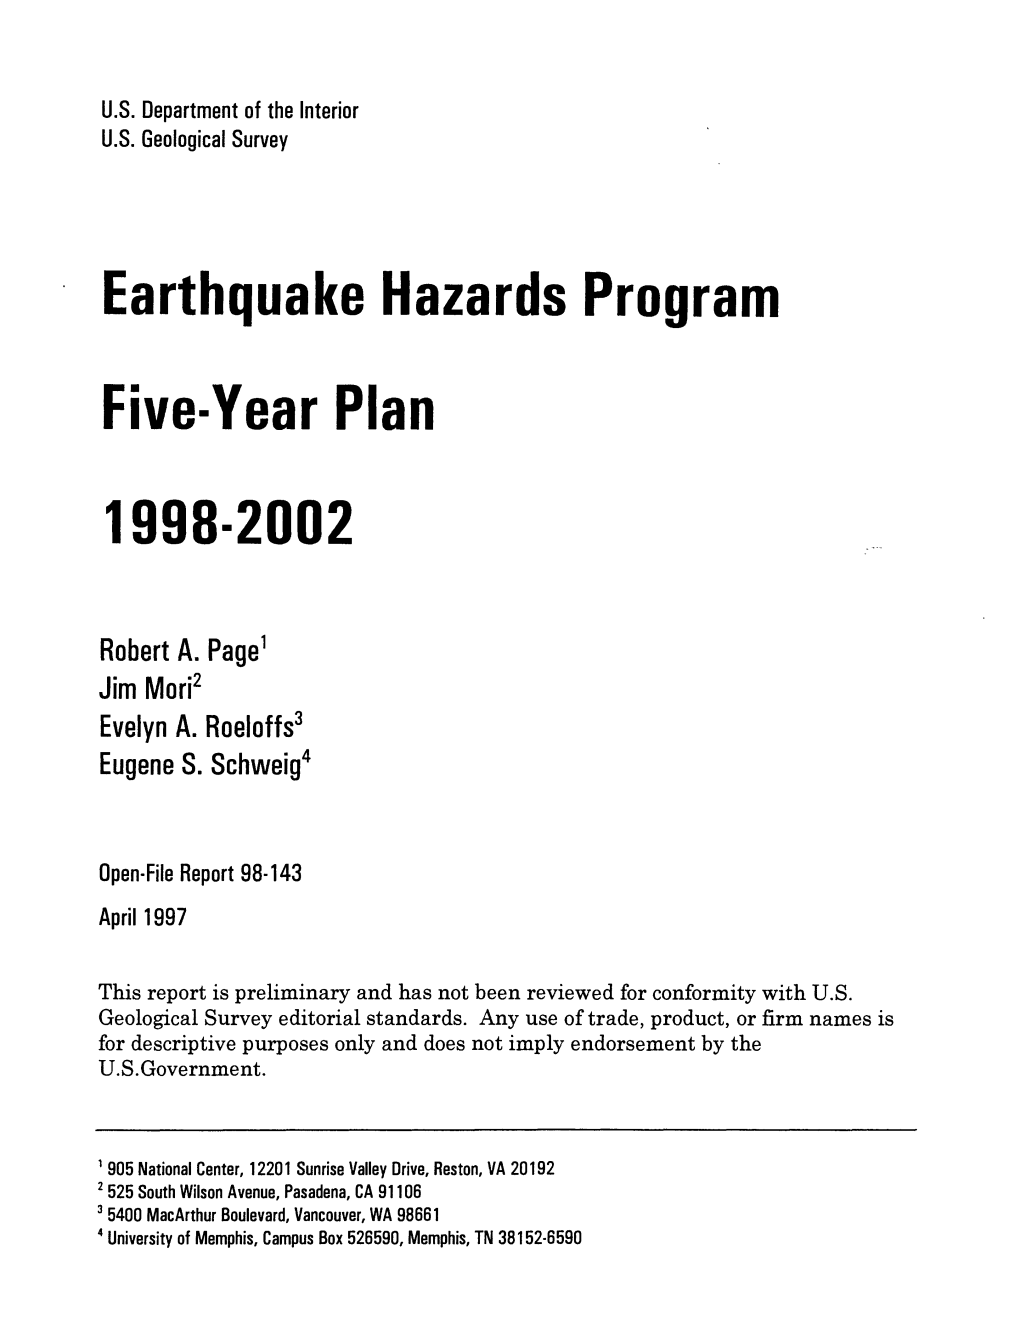 Earthquake Hazards Program Five-Year Plan 1998-2002